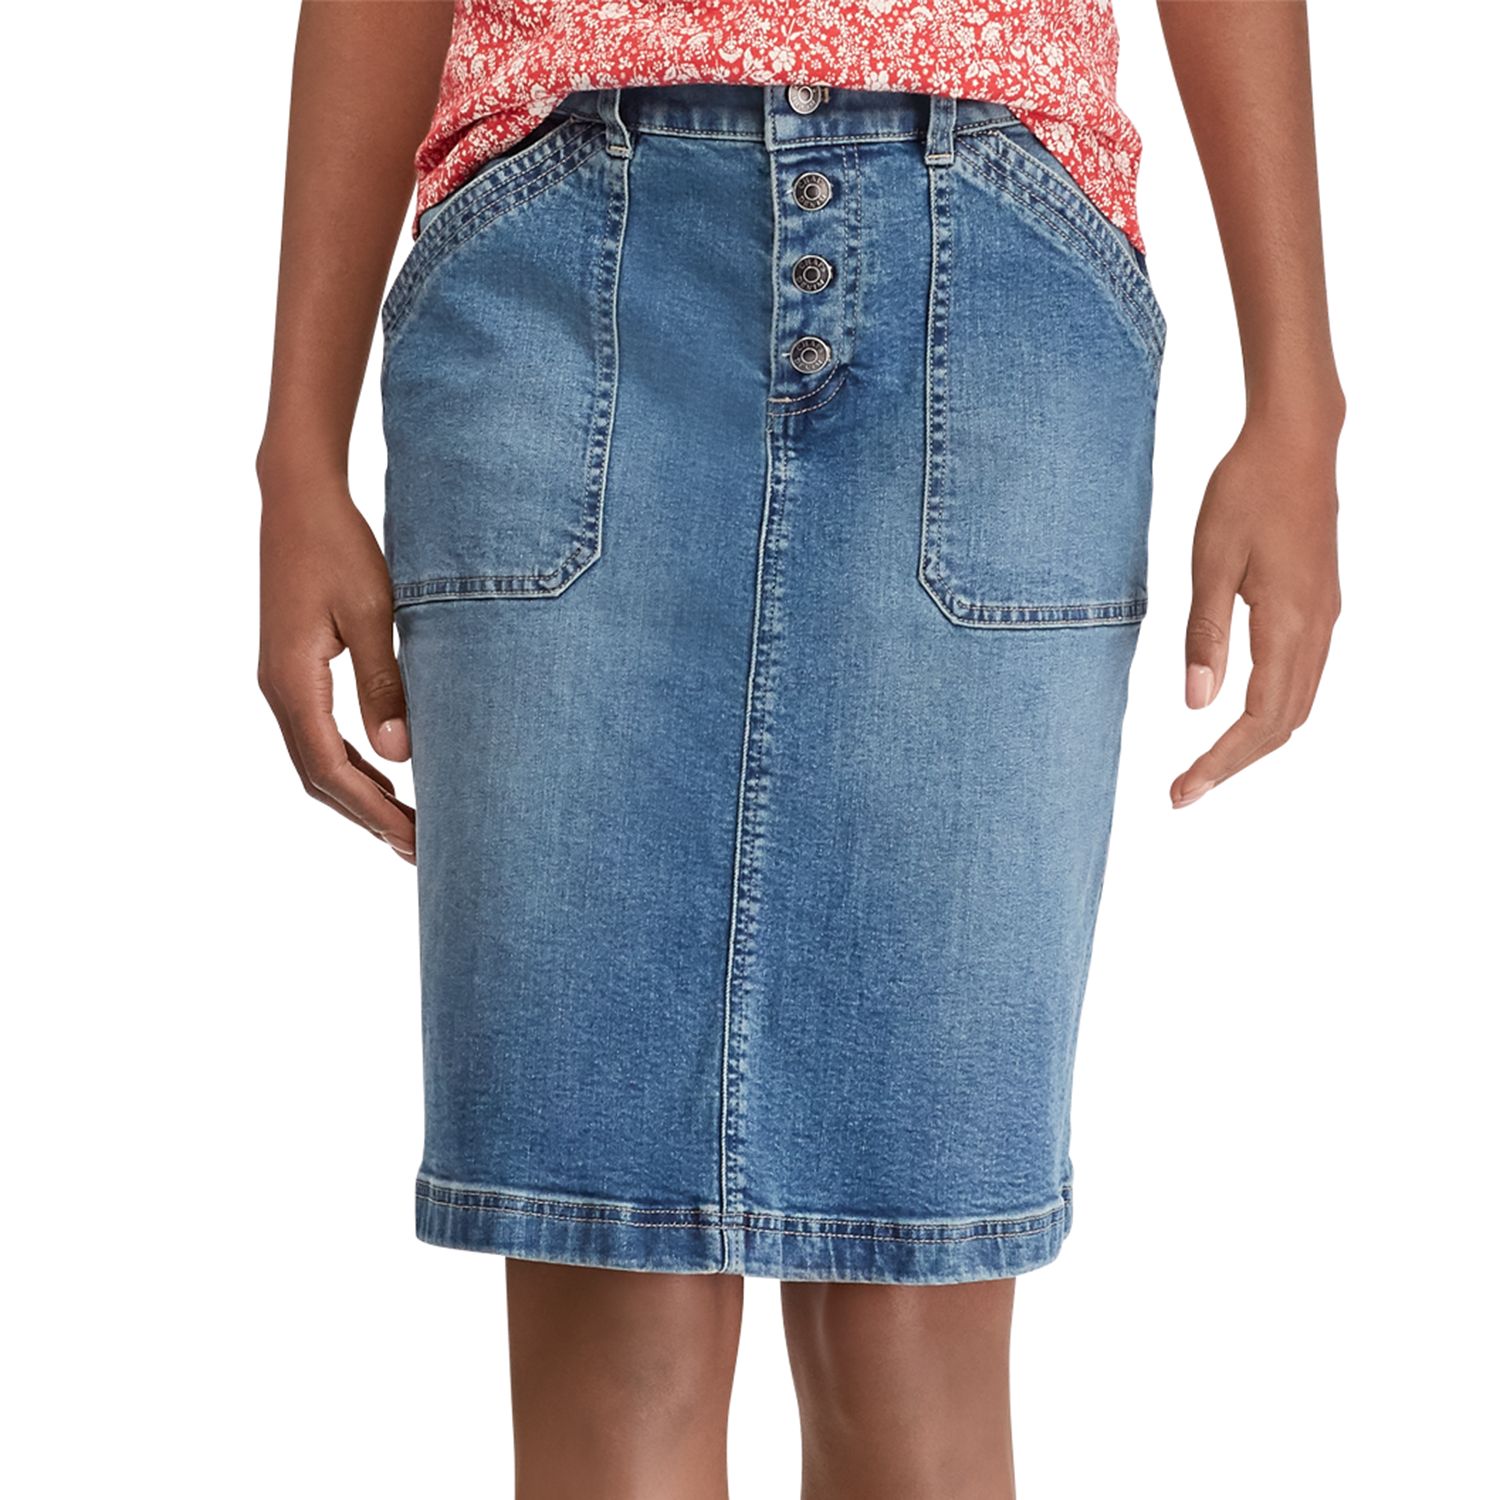 petite jean skirt